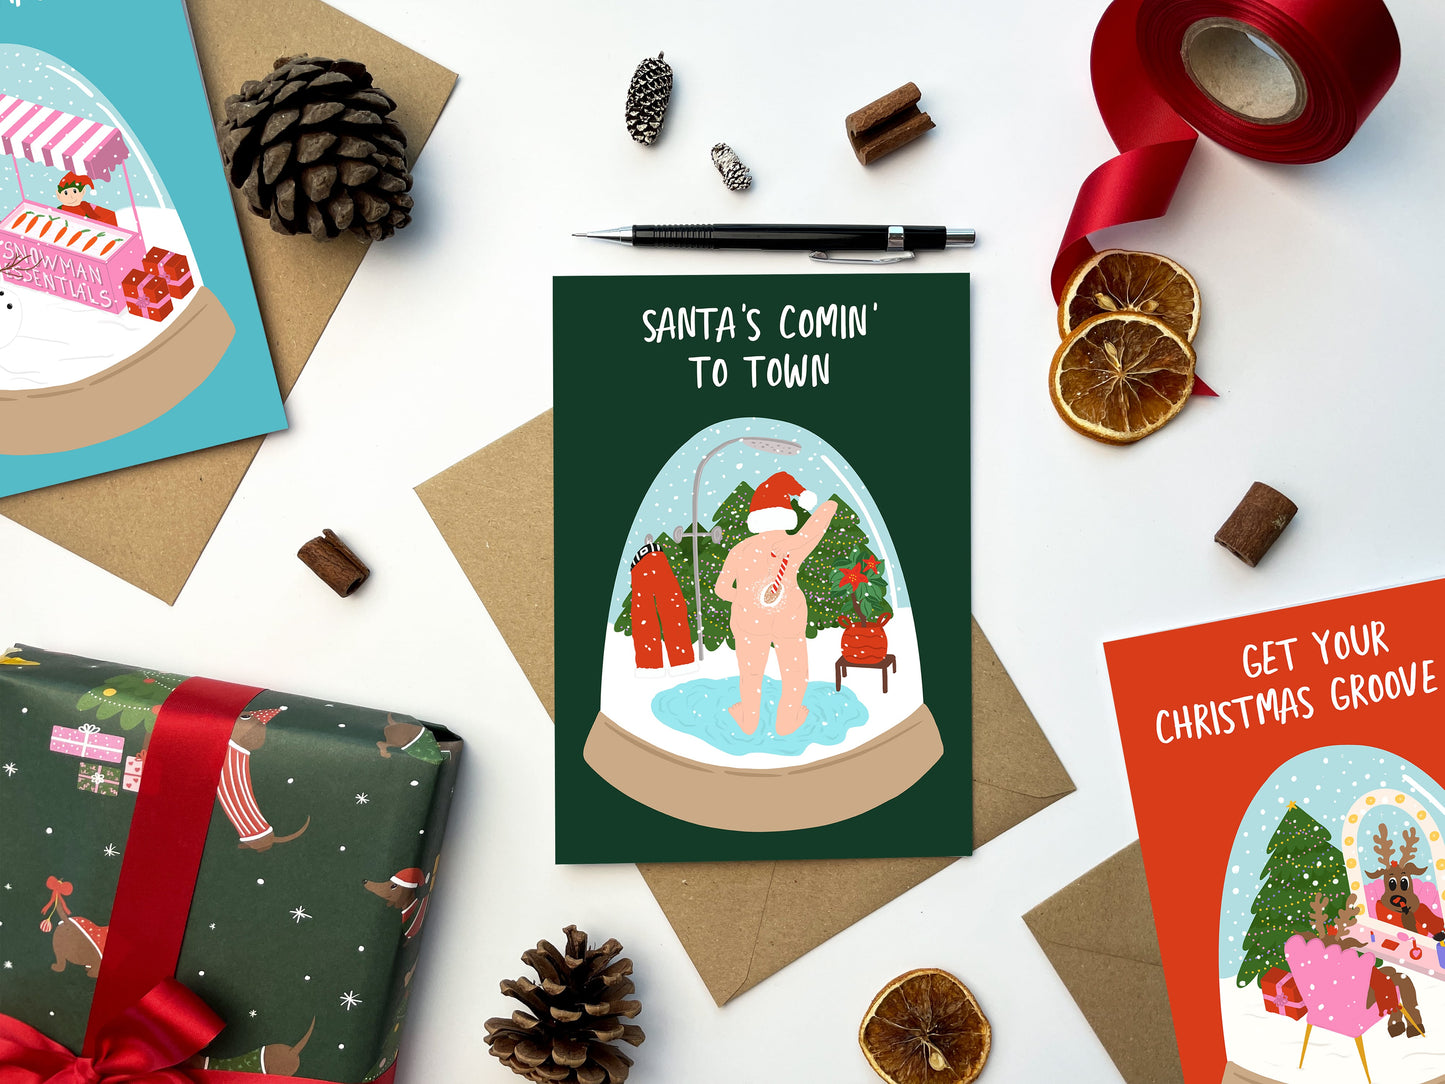 Santa's Comin' To Town | Funny Christmas Card | Holiday Card